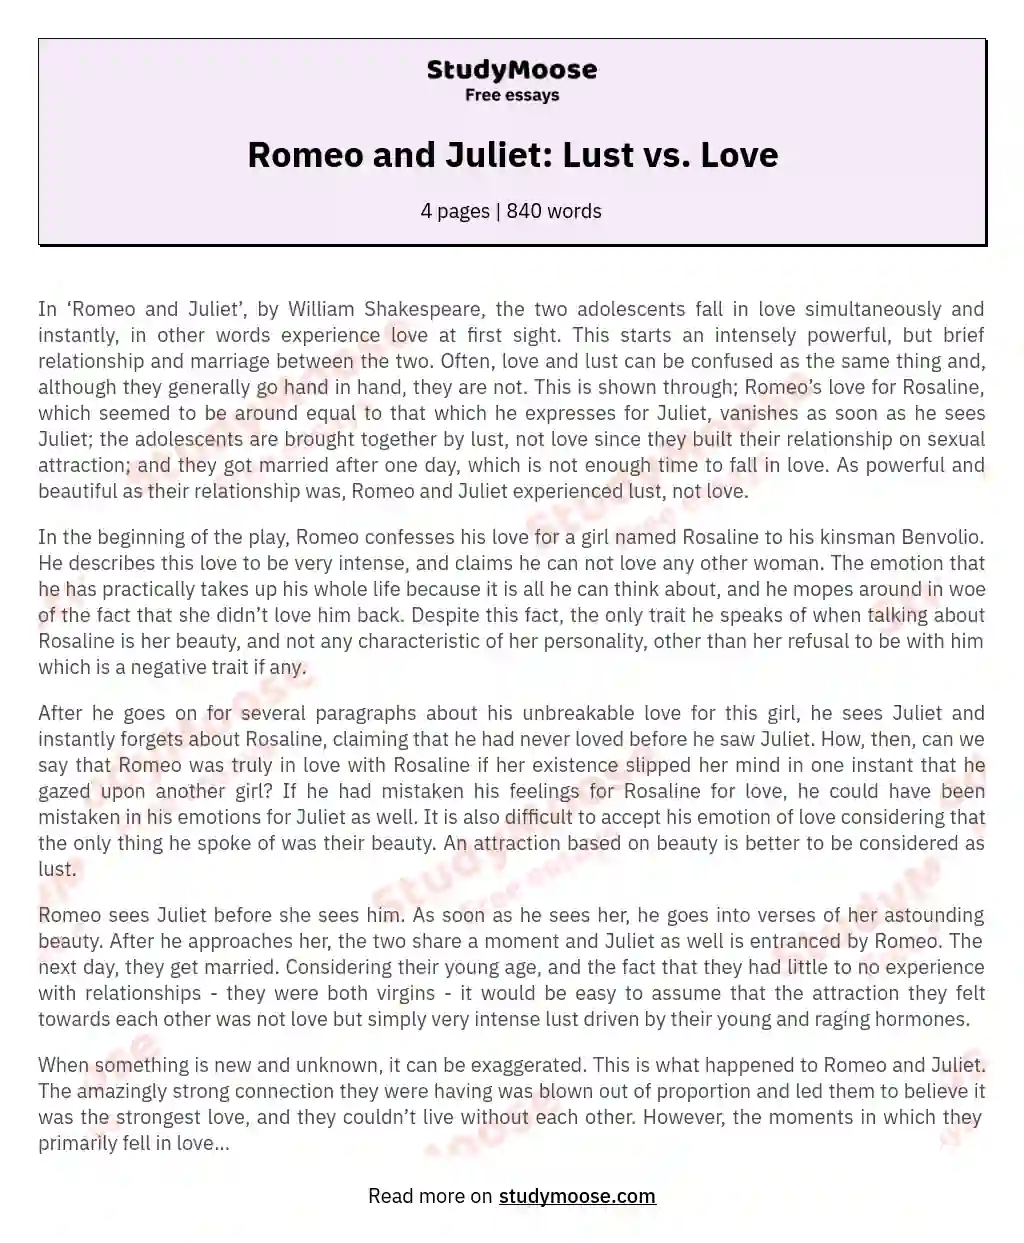 Romeo and Juliet: Lust vs. Love essay